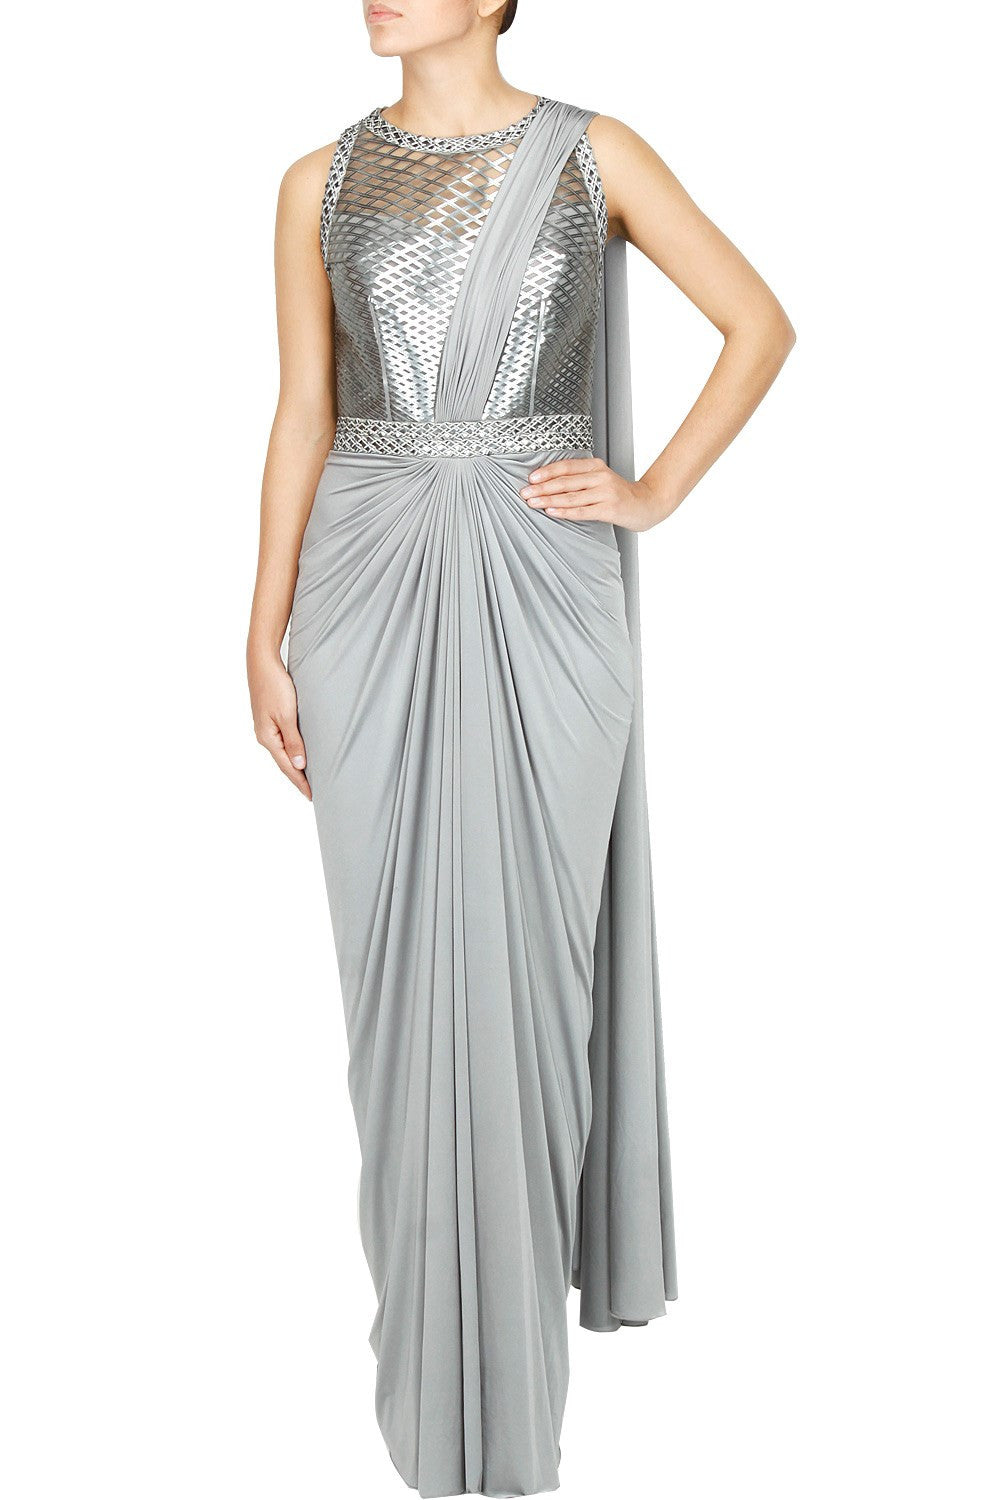 silver gray color dress